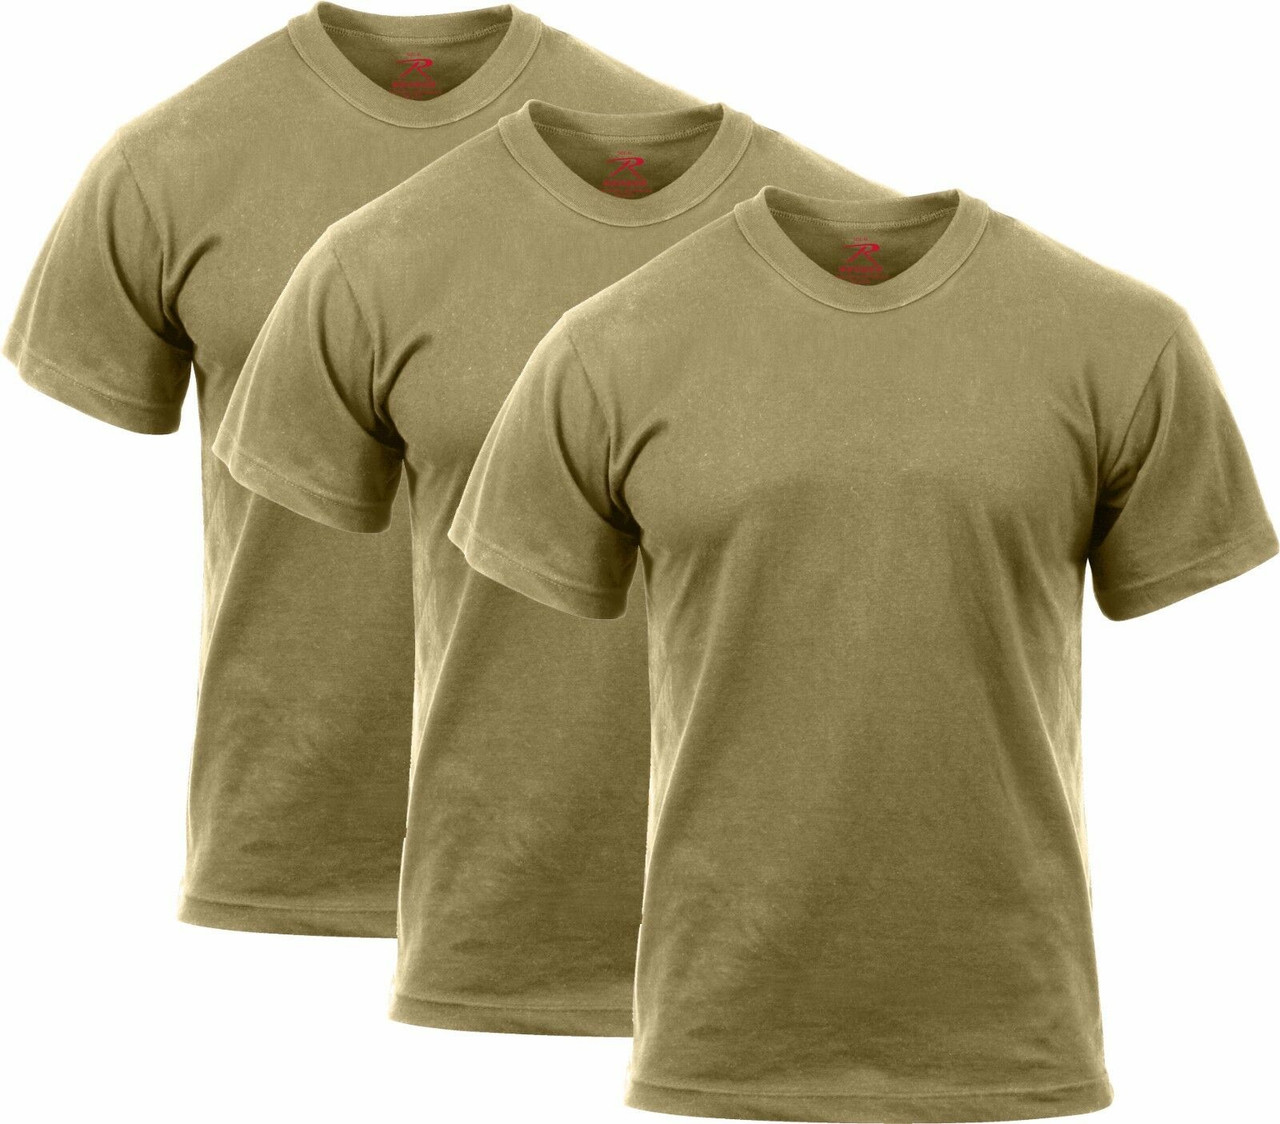 Tshirt Printed- Cotton100% Jersey- Vest Rope- Black